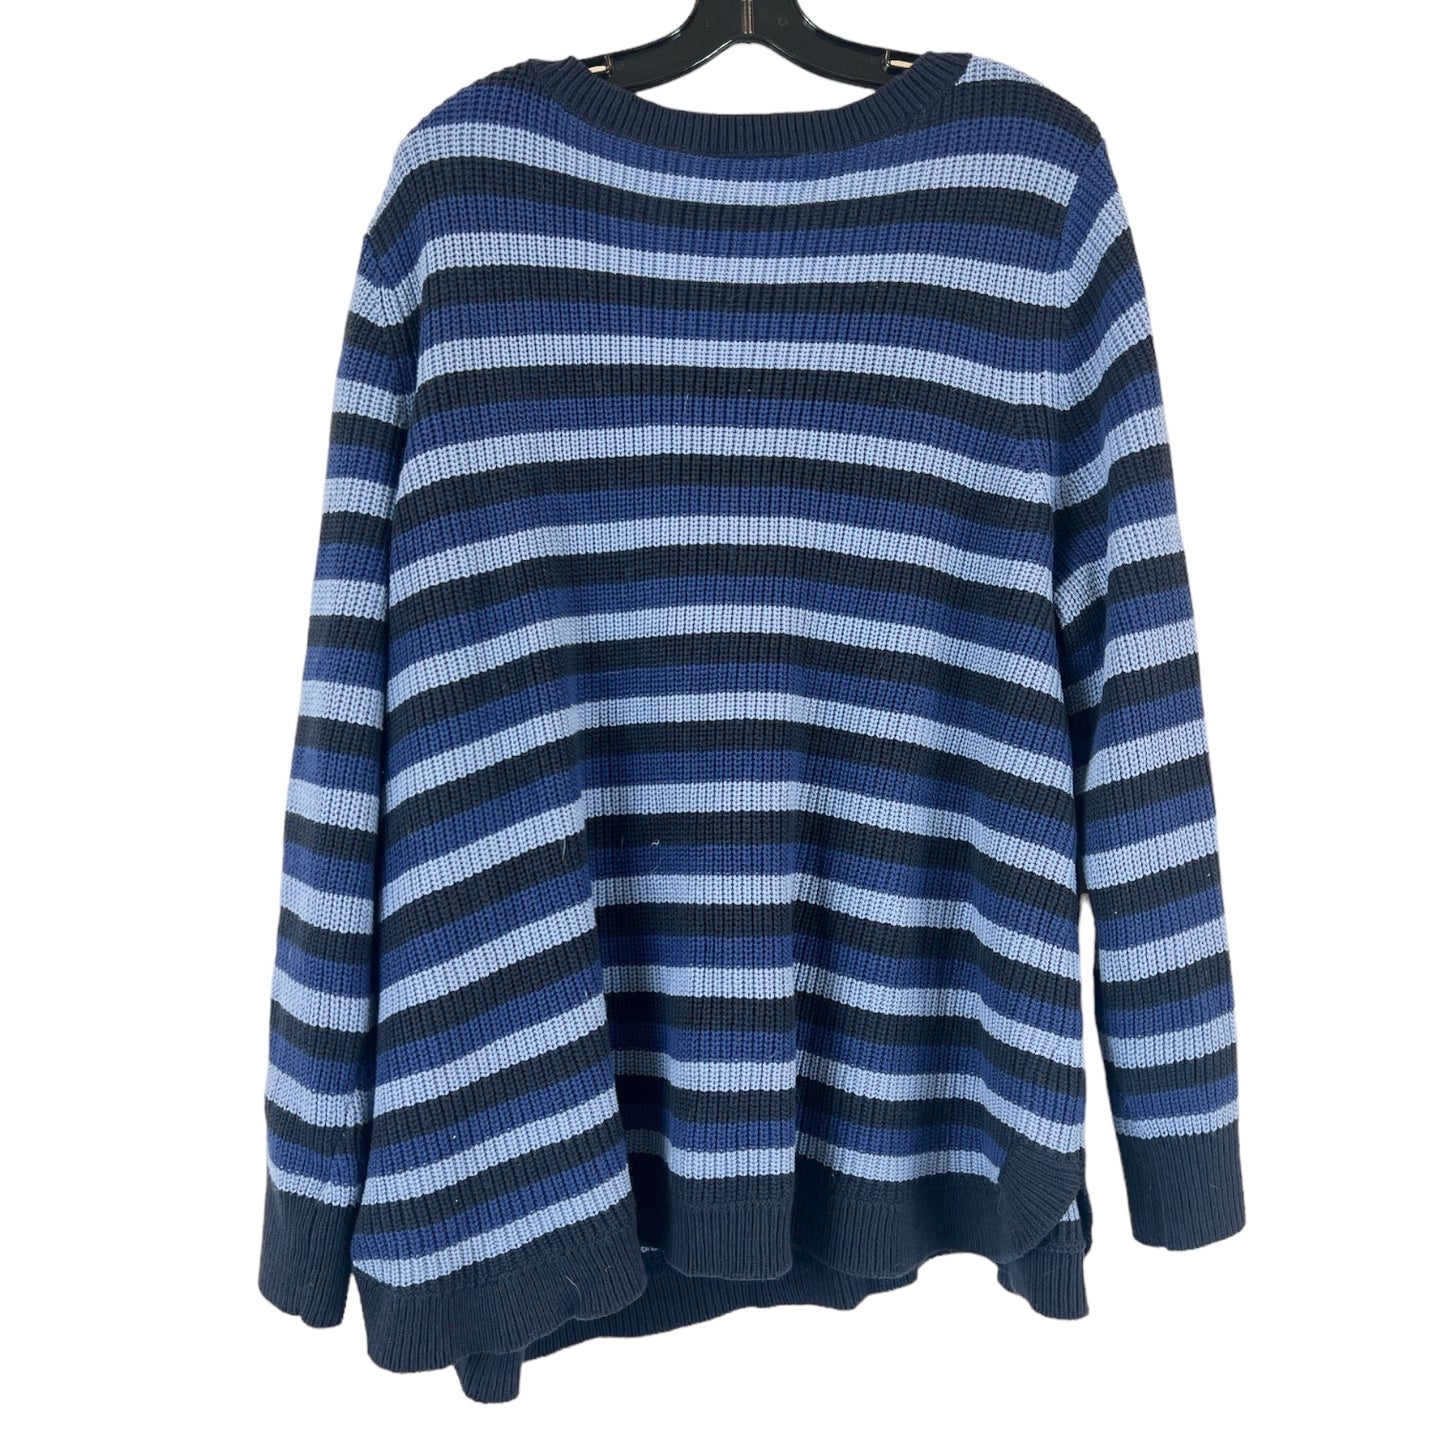 Sweater By Lane Bryant  Size: 3X